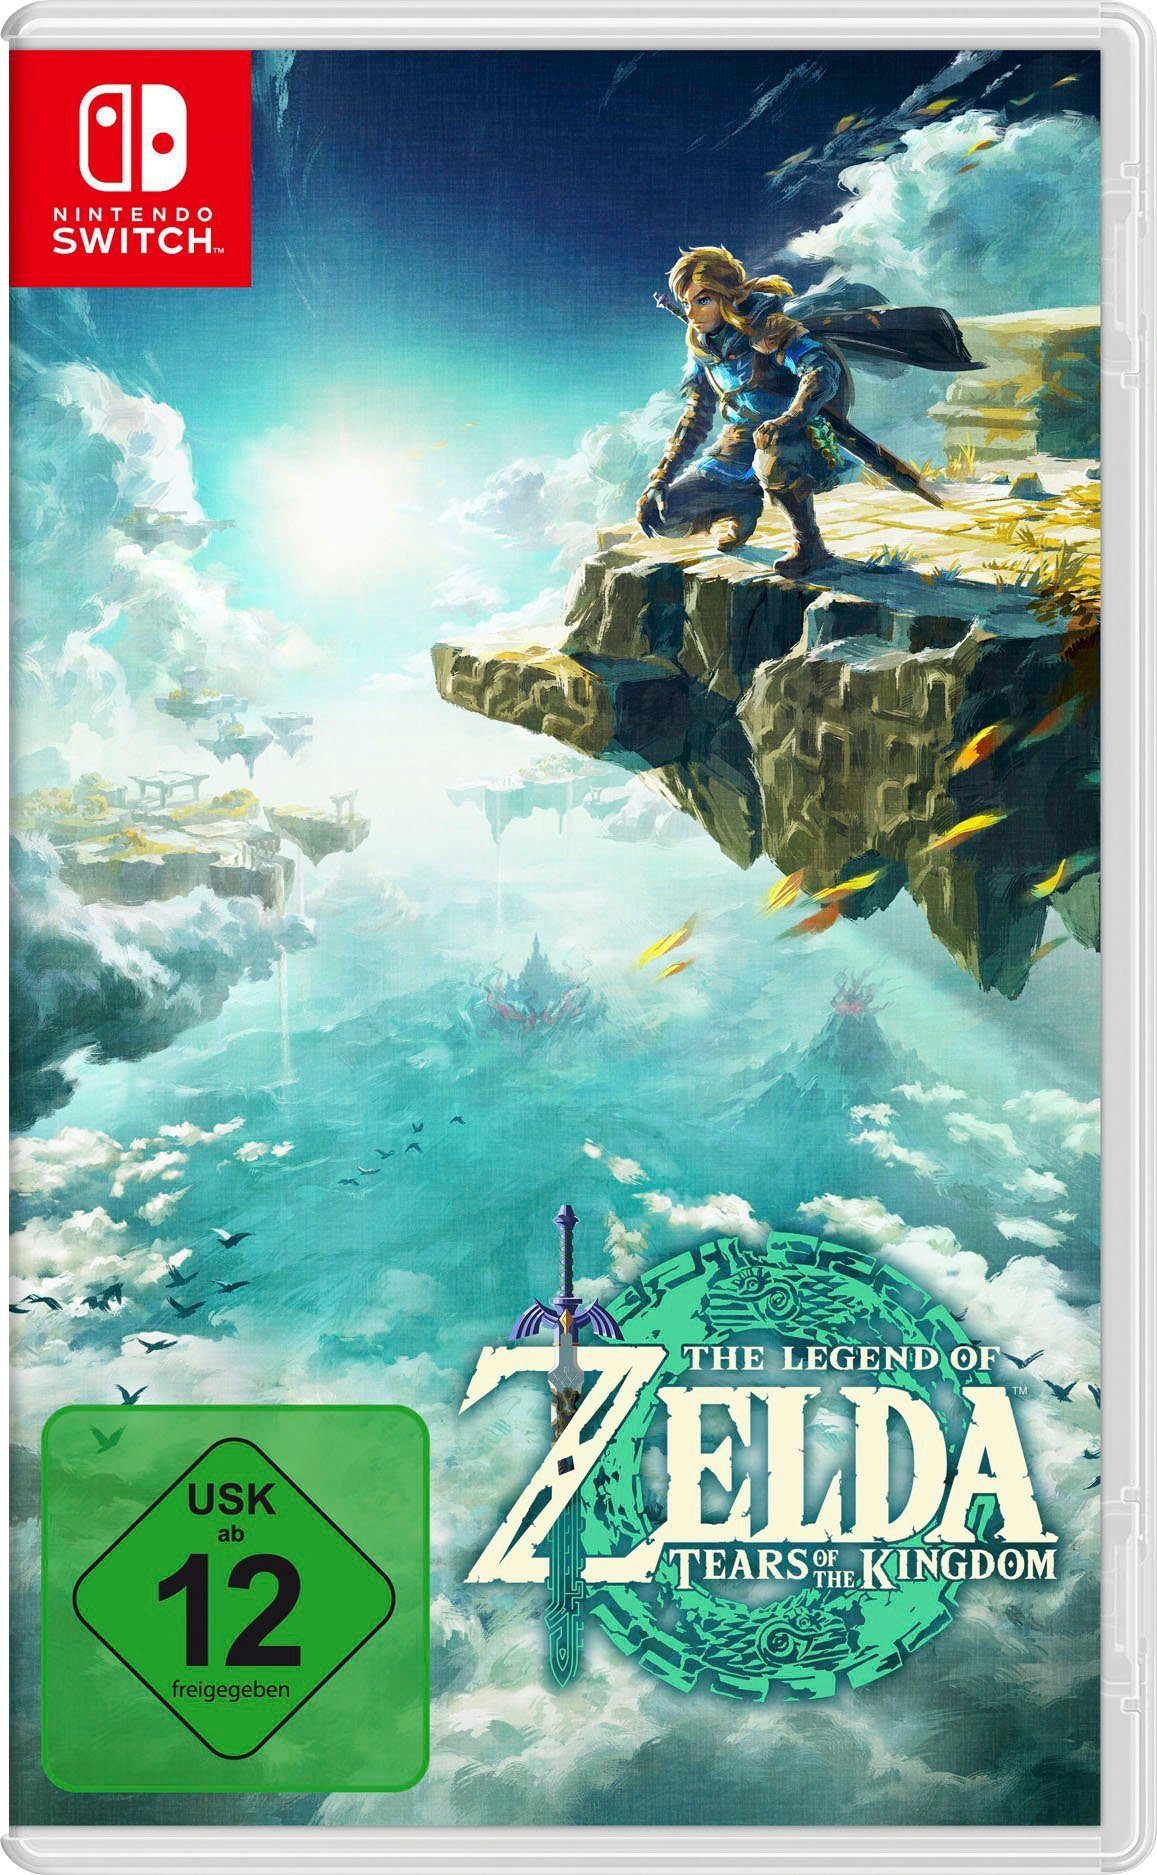 Nintendo Switch Kingdom Edition OLED Tears Legend TotK of the of Zelda The 